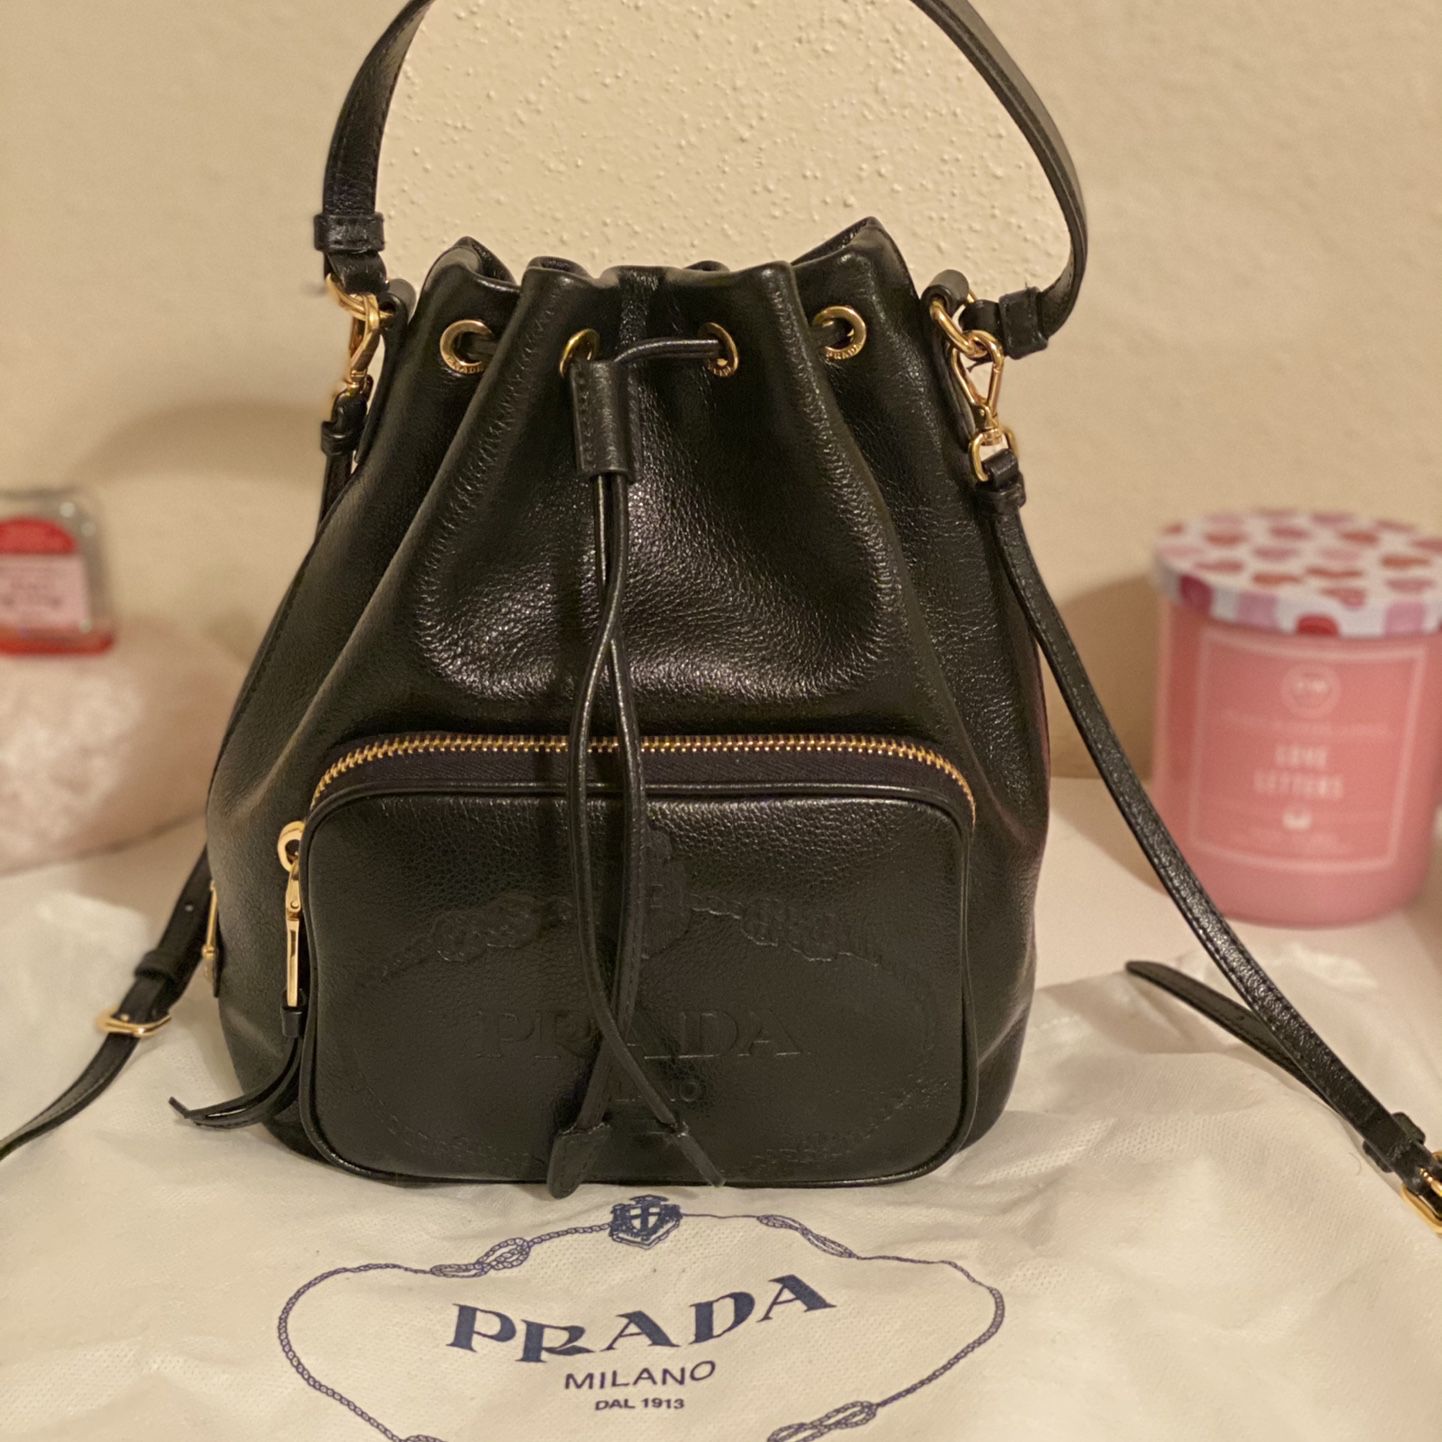 Prada Bucket Bag for Sale in San Antonio, TX - OfferUp